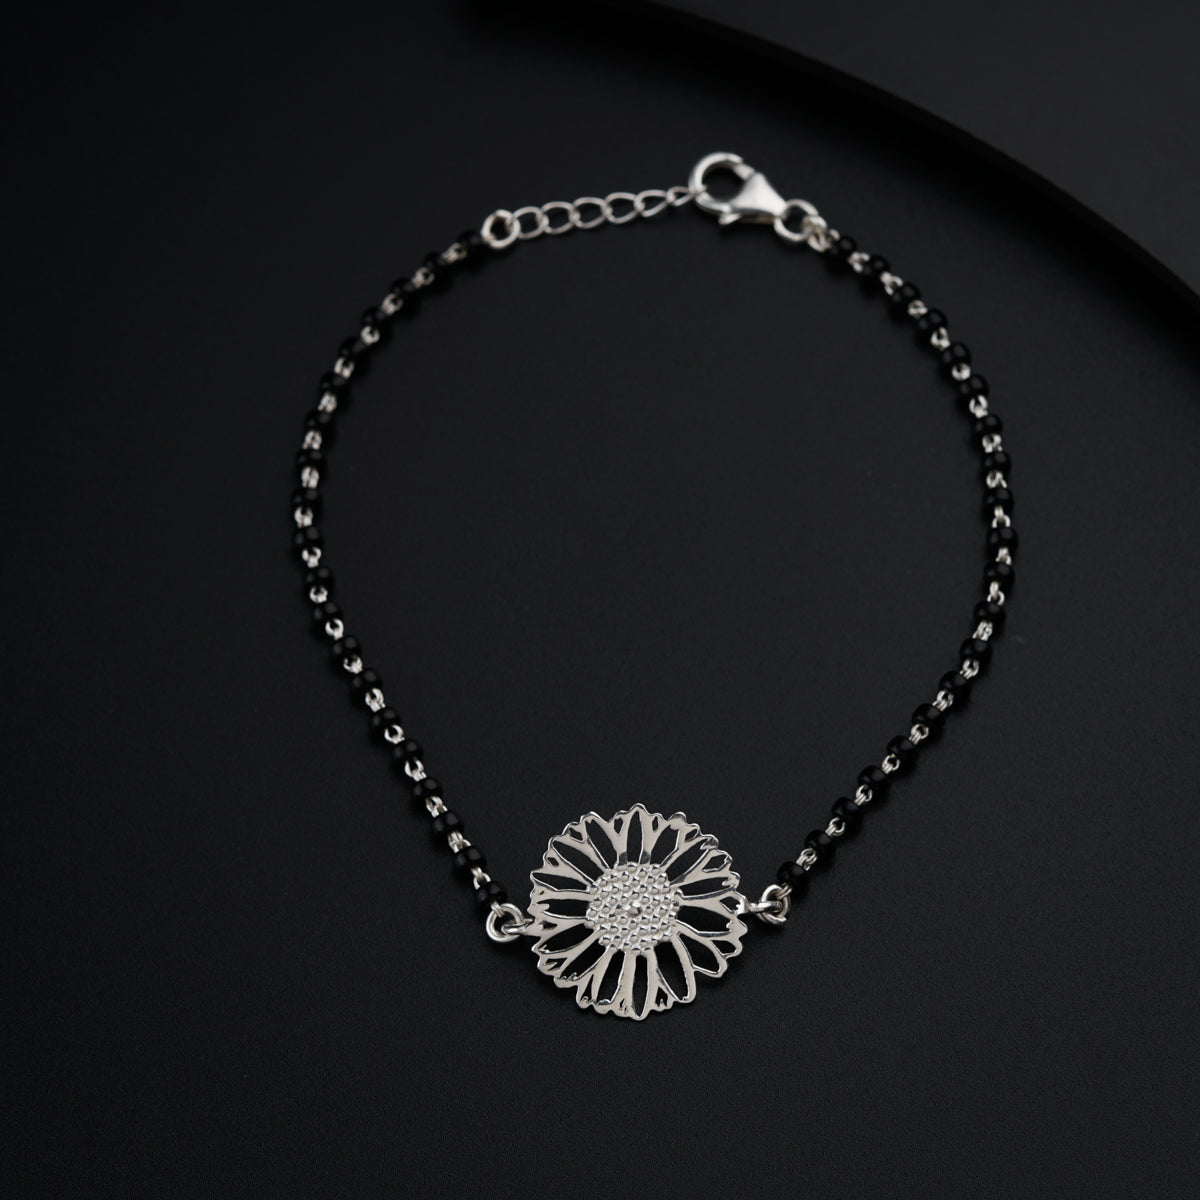 a black beaded bracelet with a flower on it